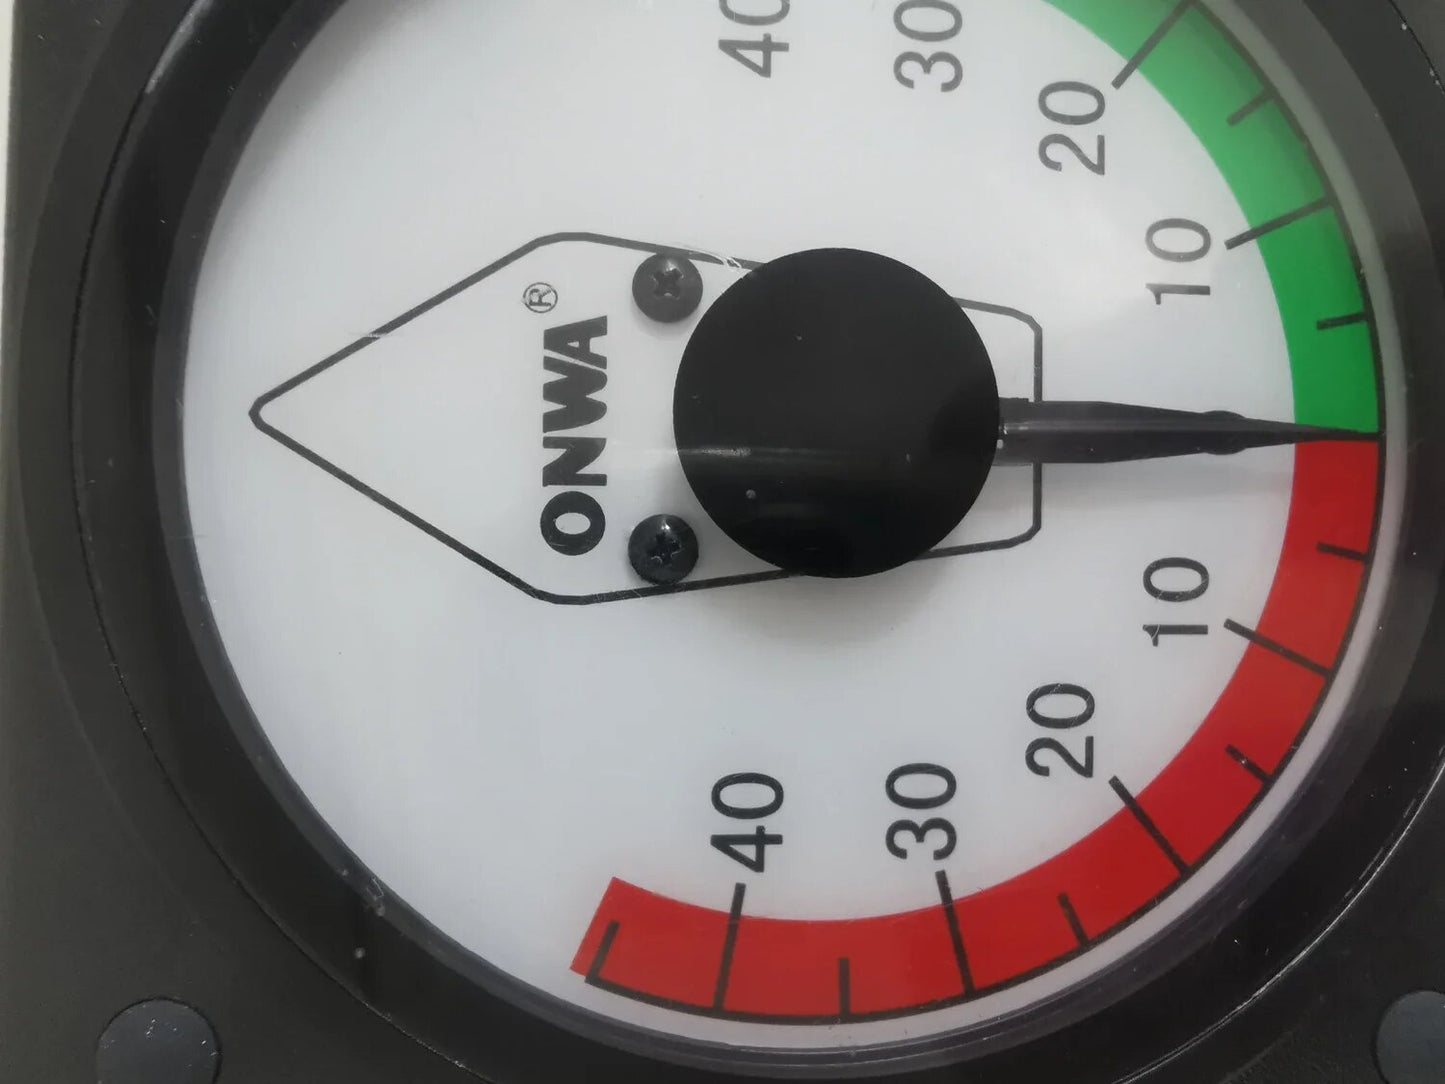 ONWA KRI-80S Rudder Indicator Analog Rudder Angle indication system Suitable for all kind of vessels